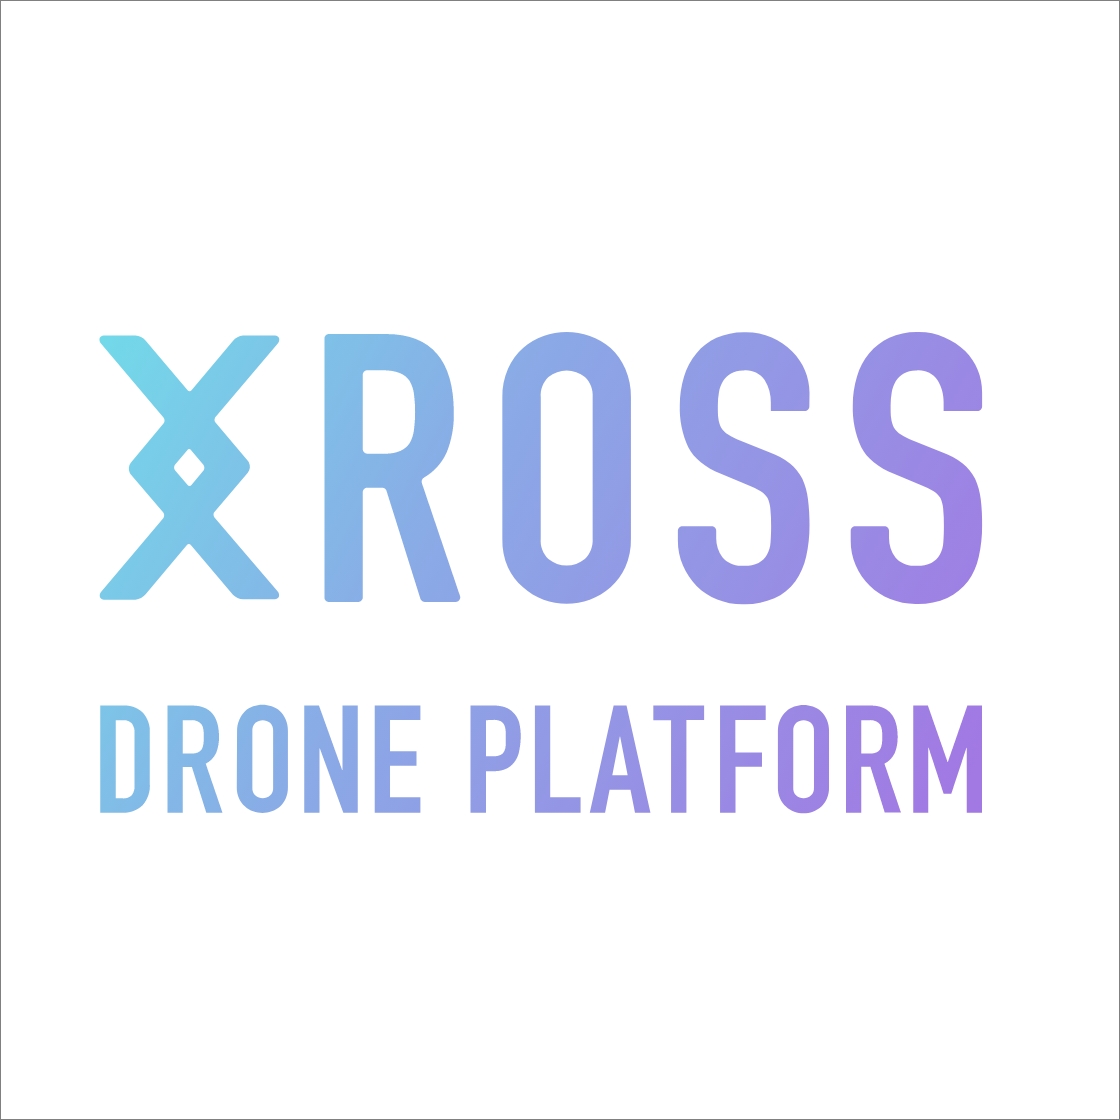 droneplatform XROSS